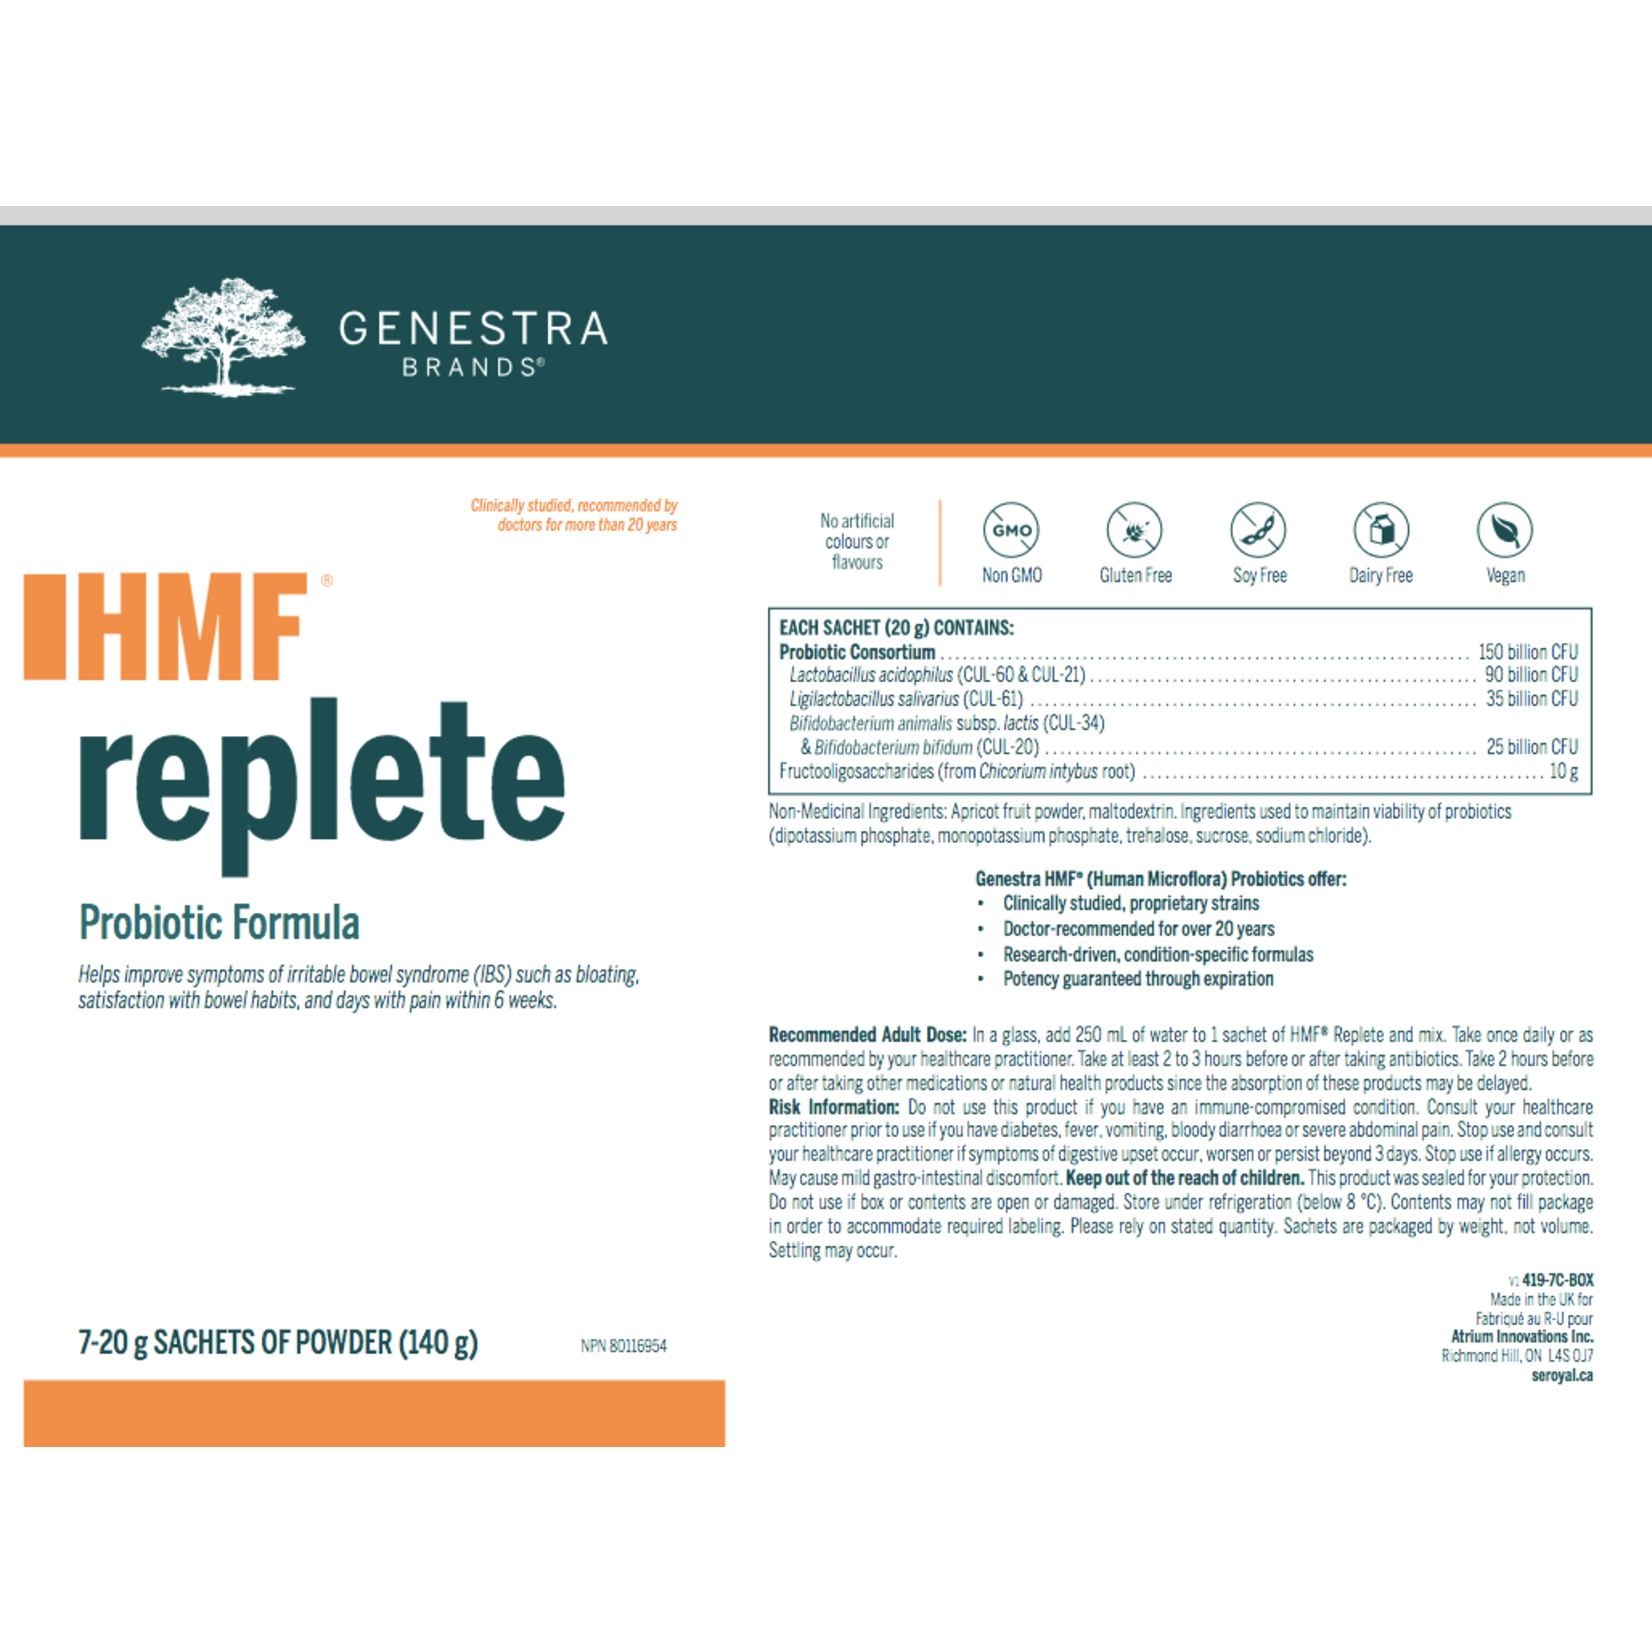 Genestra HMF Replete